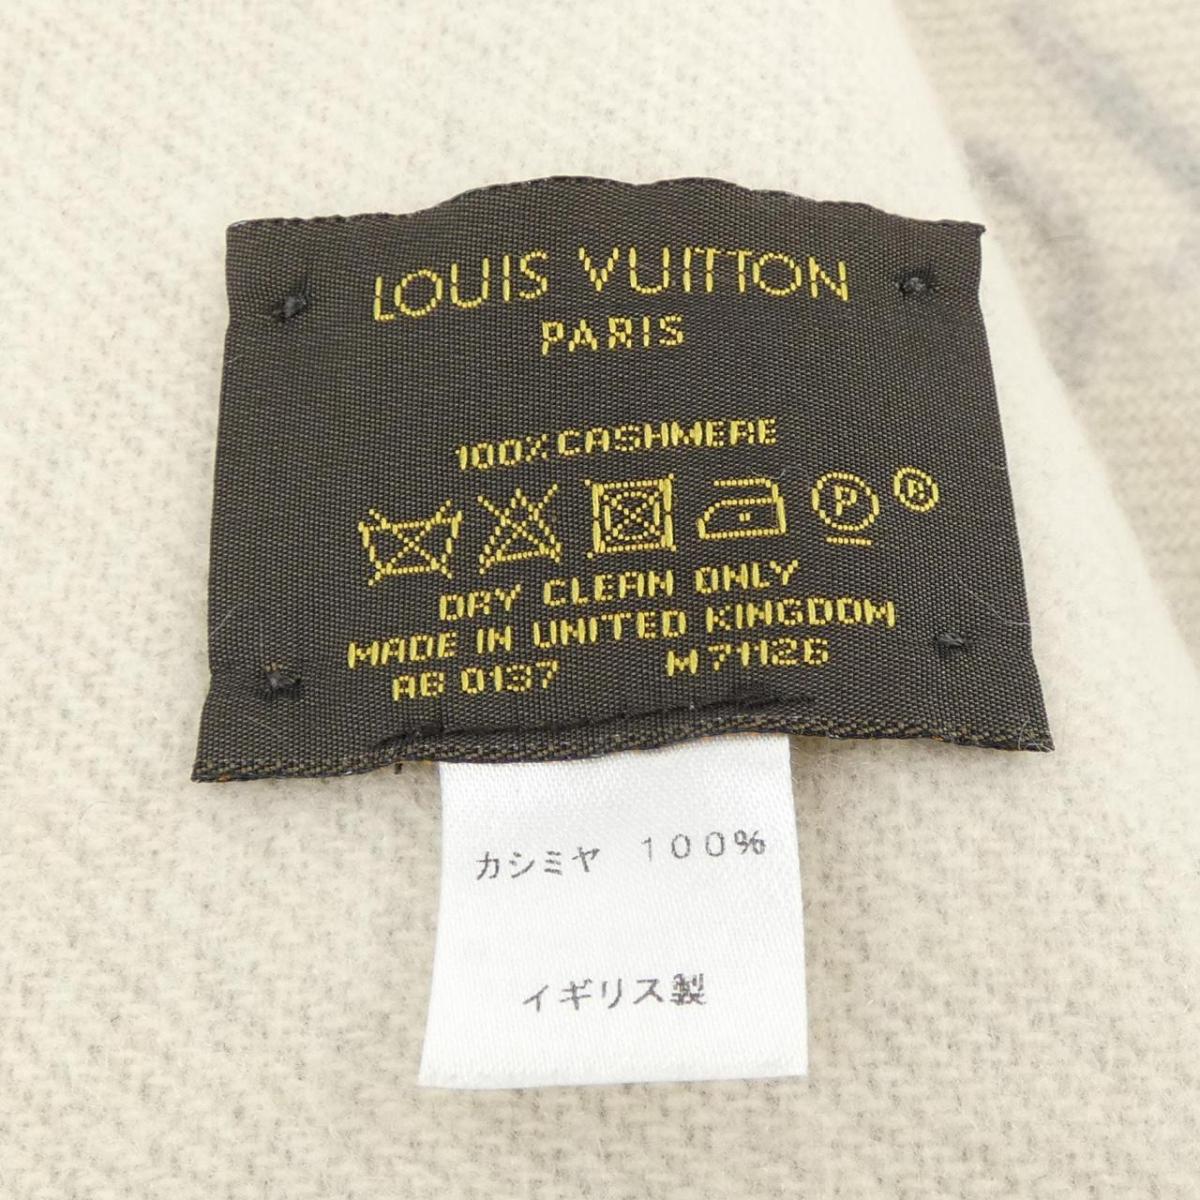 Louis Vuitton’s